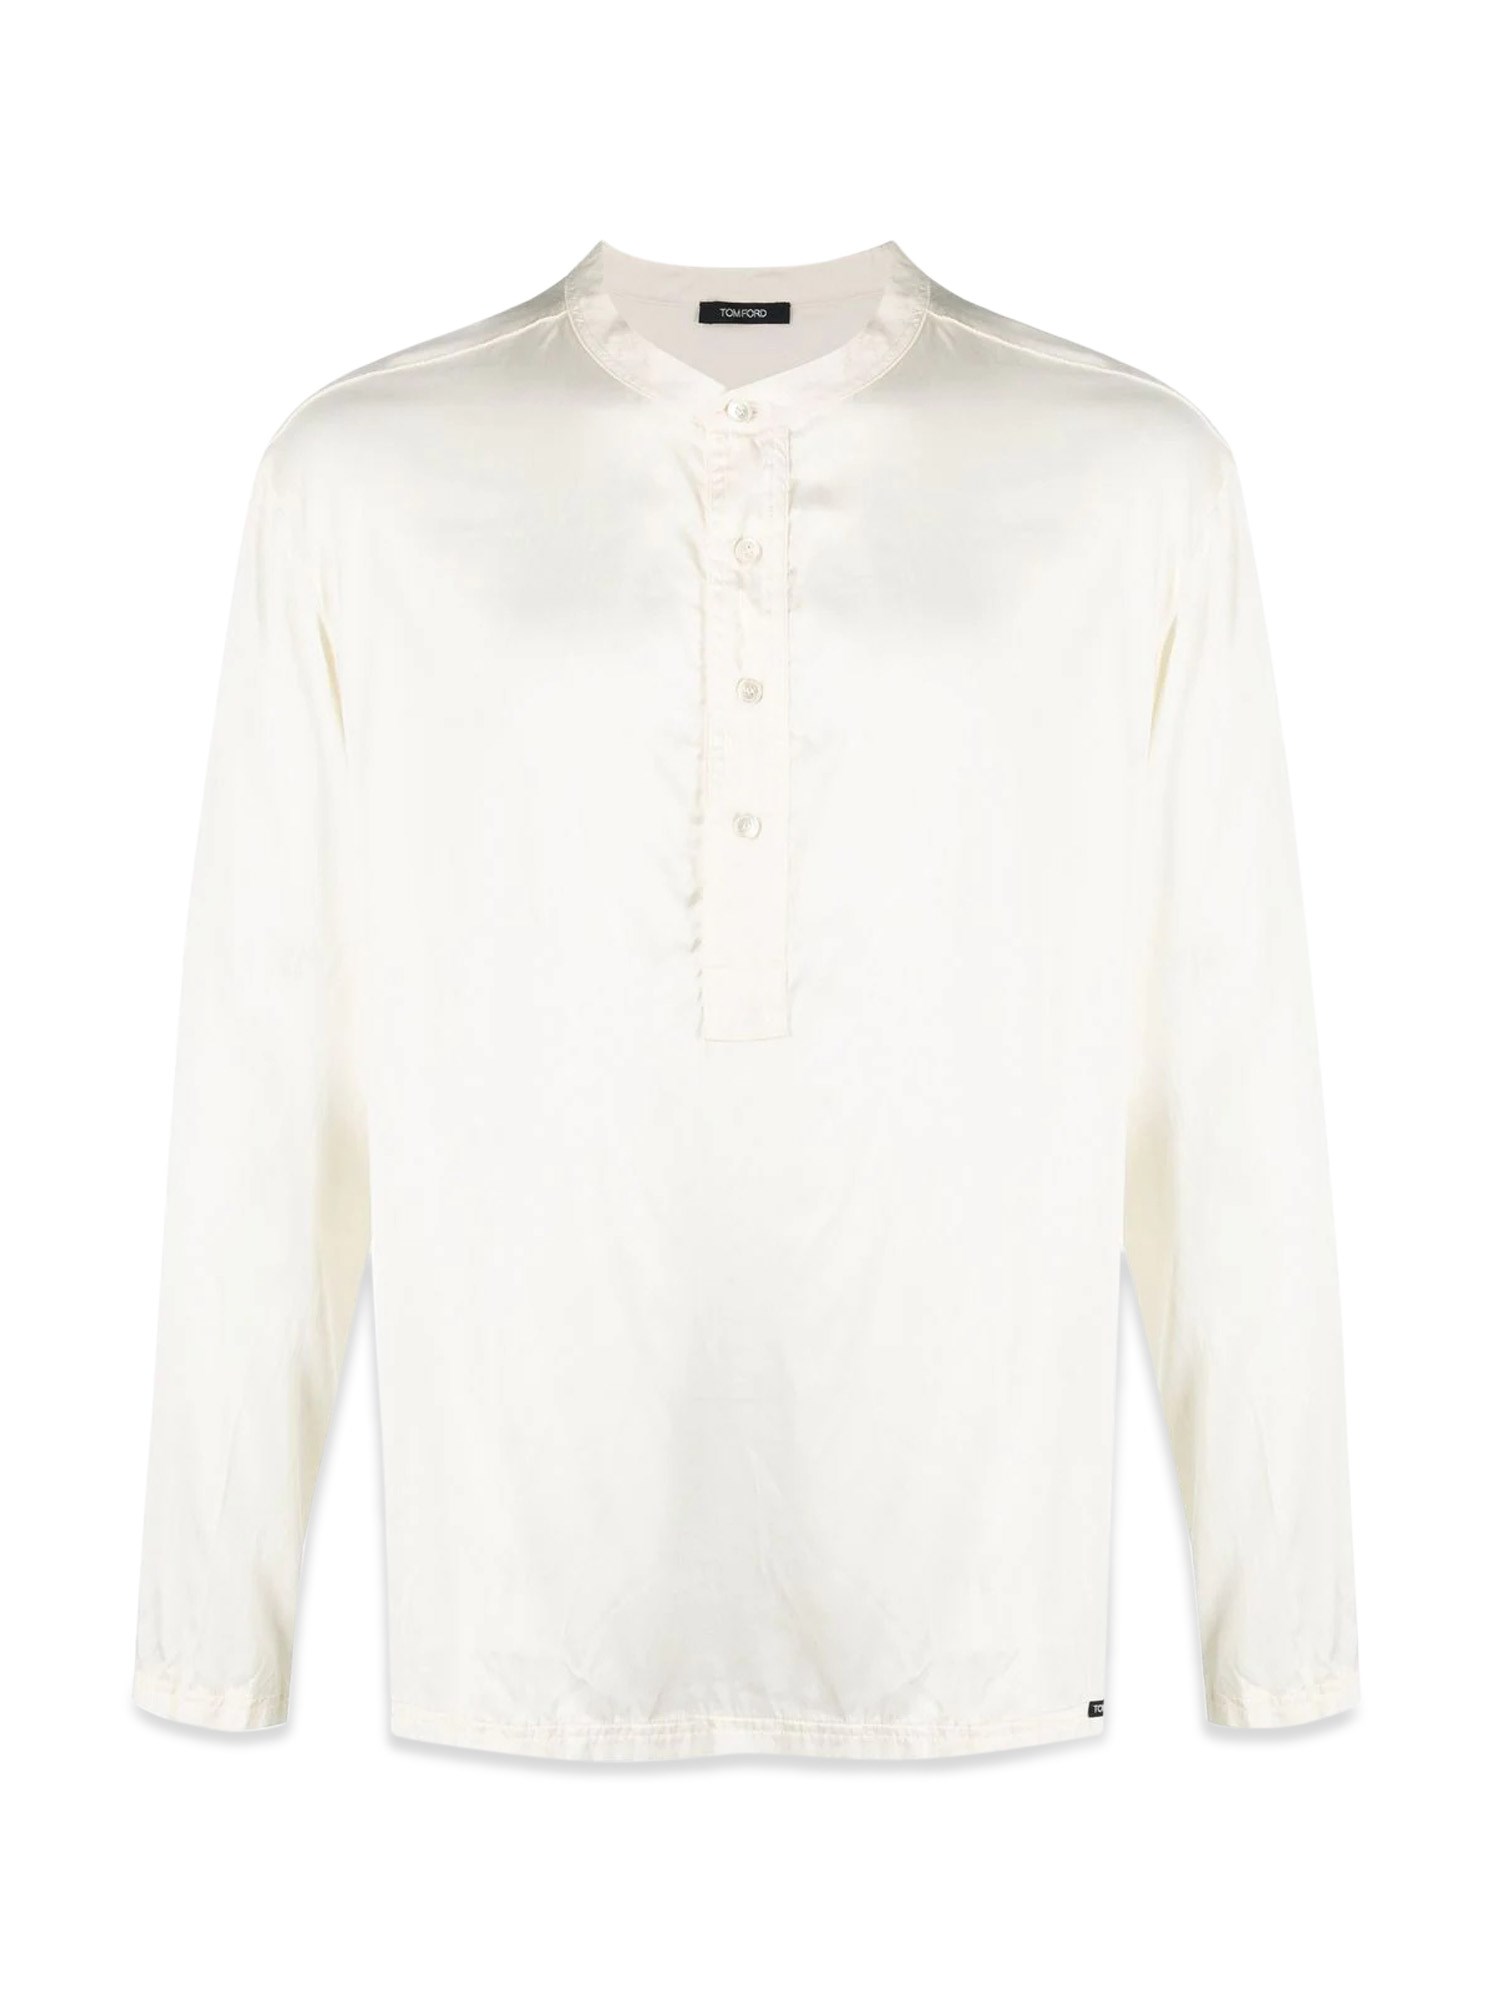 Tom Ford Henley Shirt In White